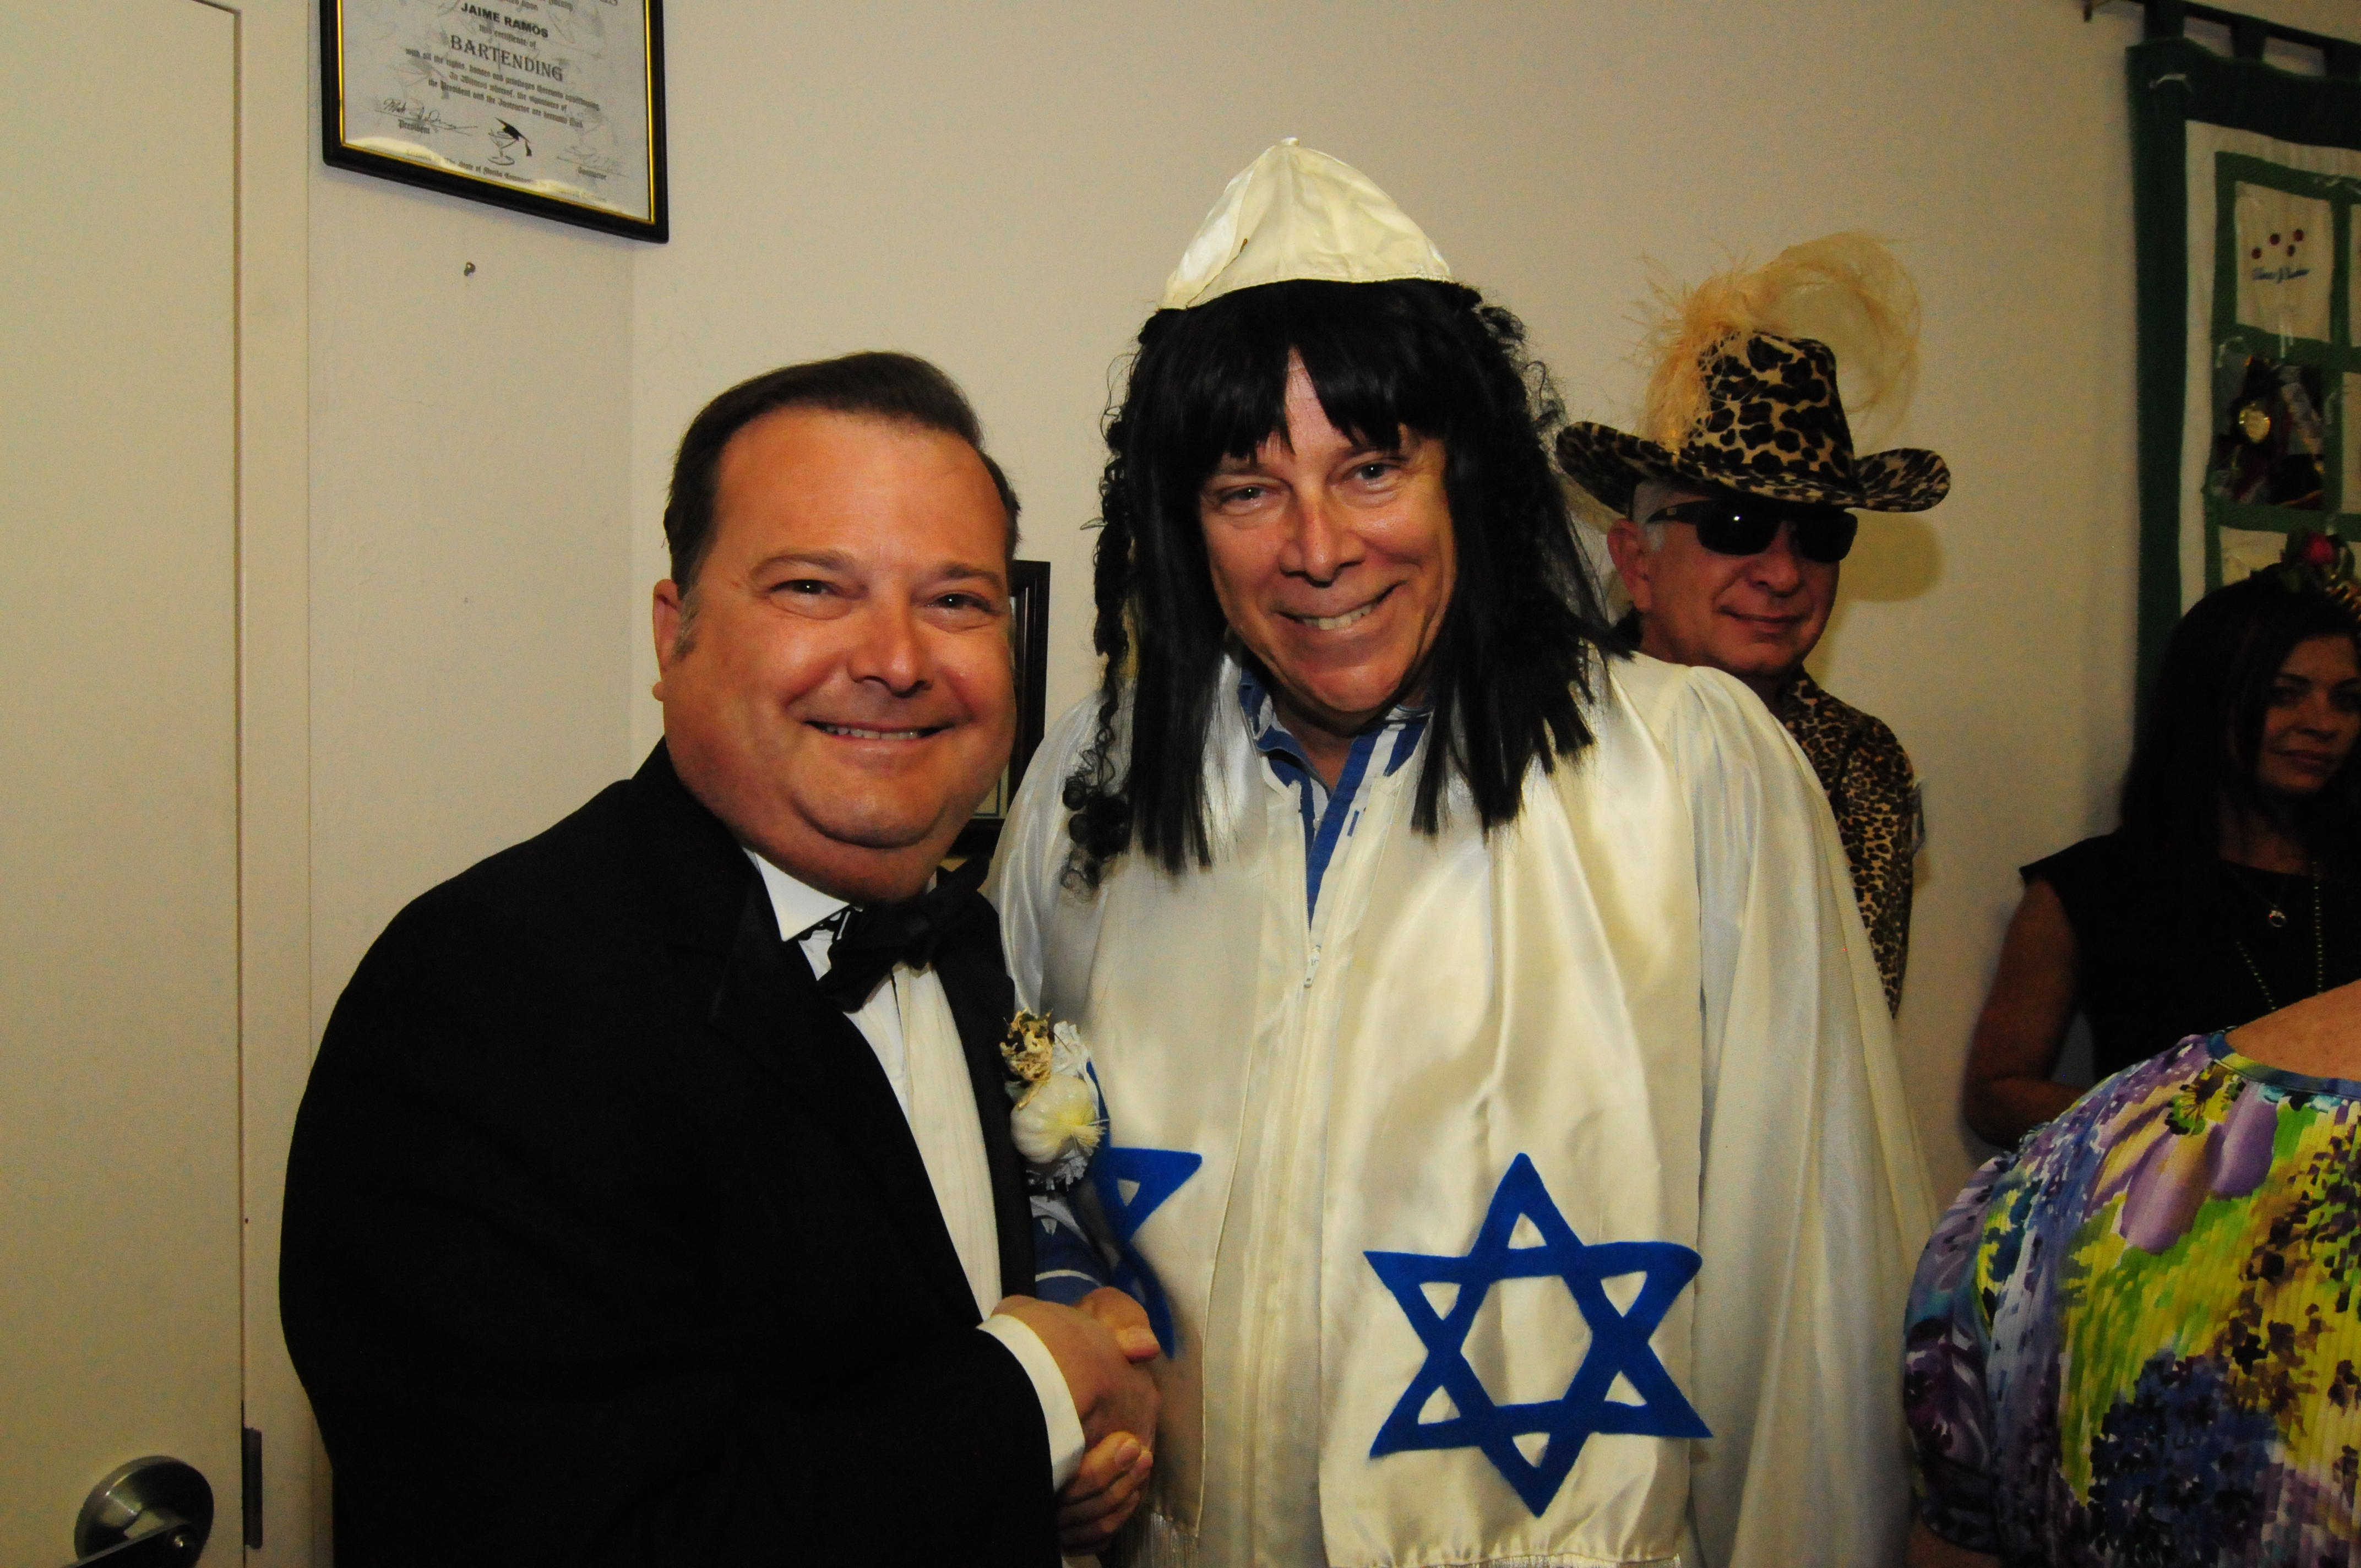 Doug La Rue and Todd Vittum - Jewish Italian Wedding 2014